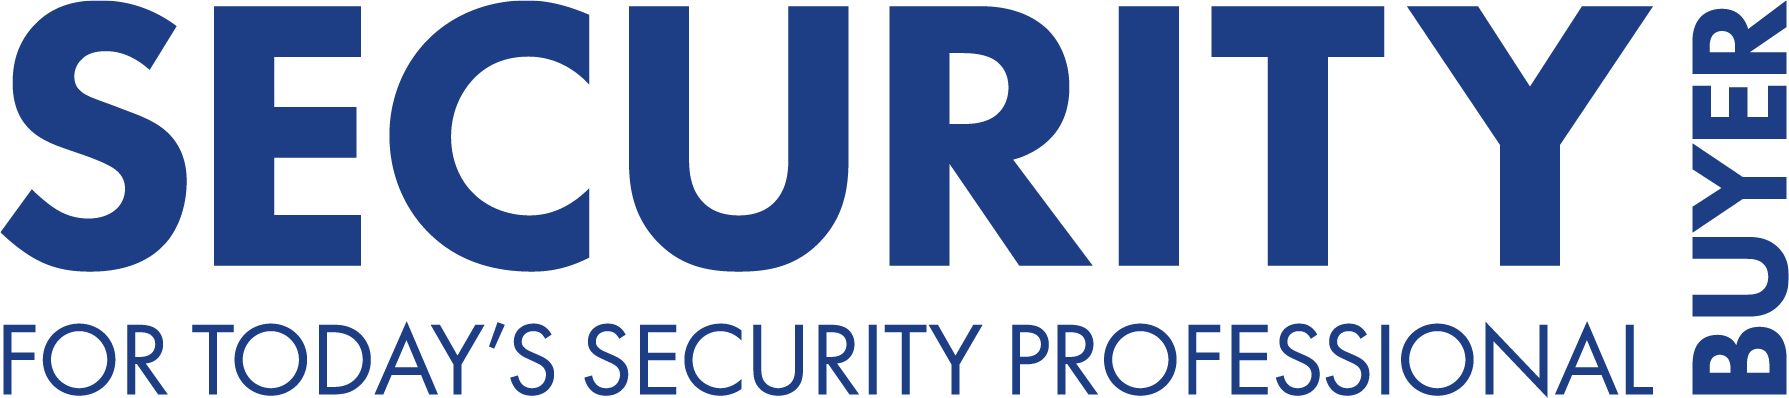 International Security Buyer logo